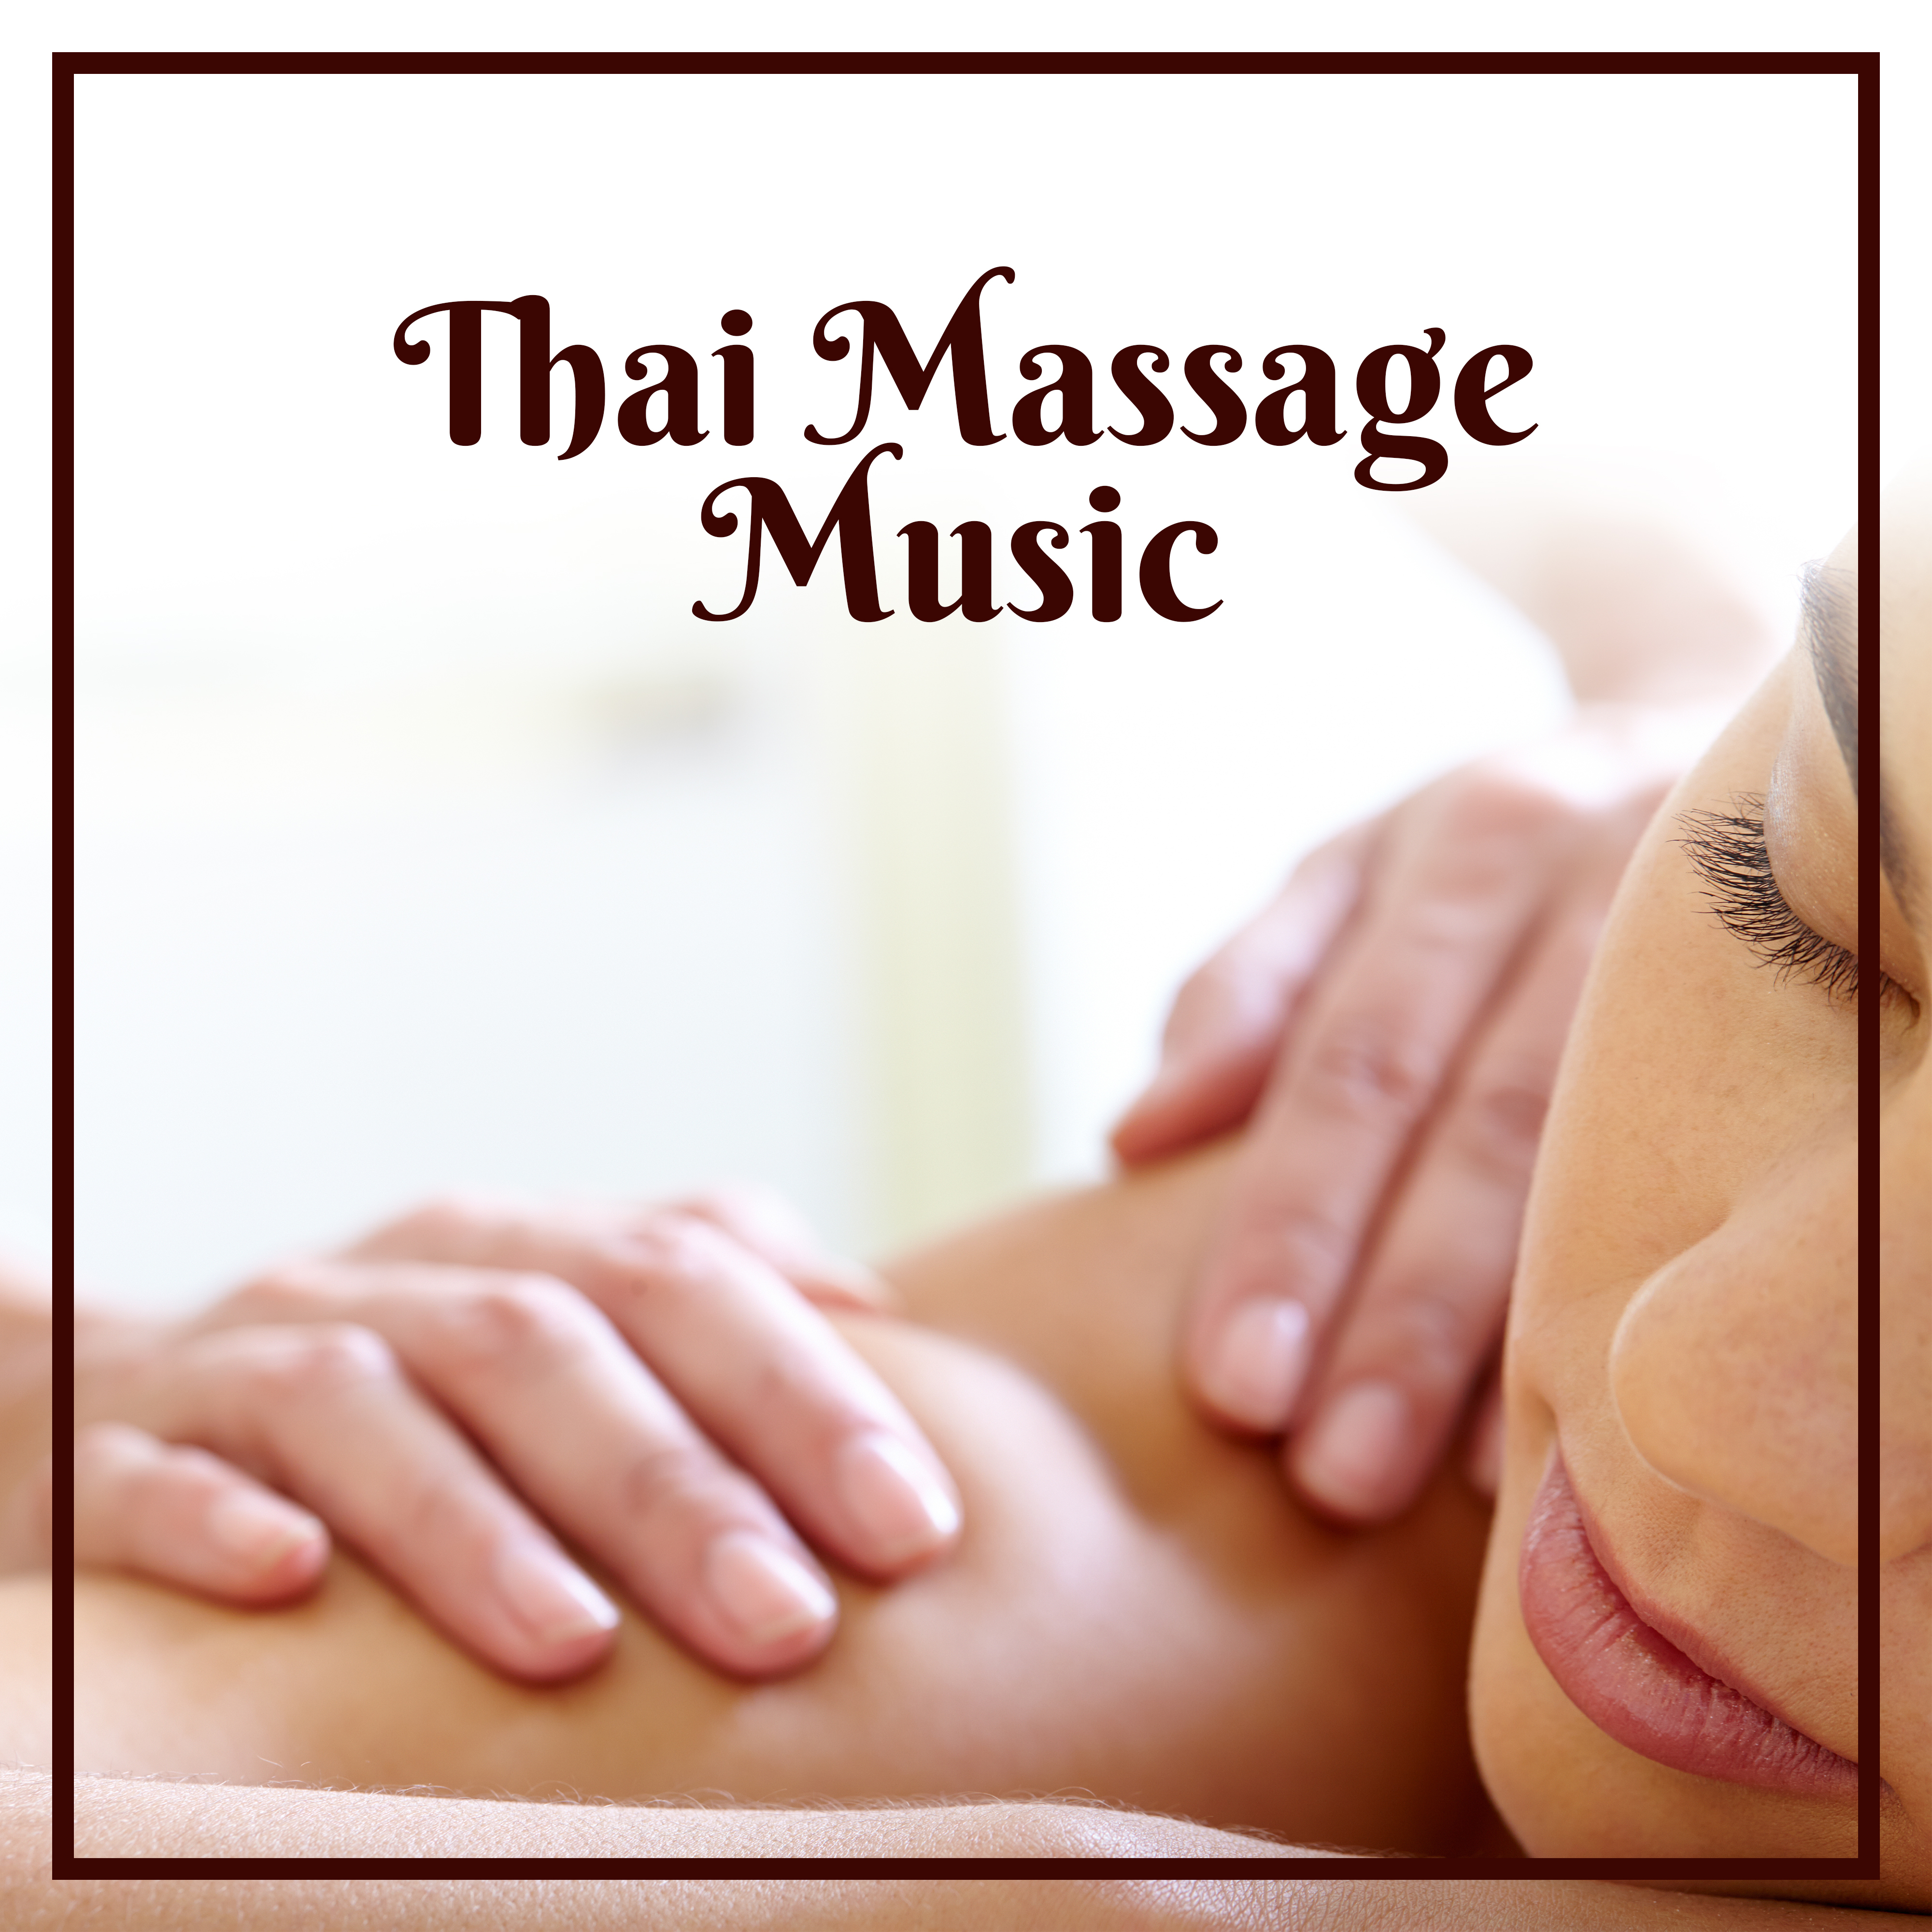 Thai Massage Music  Healing Nature Sounds, Music for Massage, Spa Relaxation, Beauty Treatments, Zen